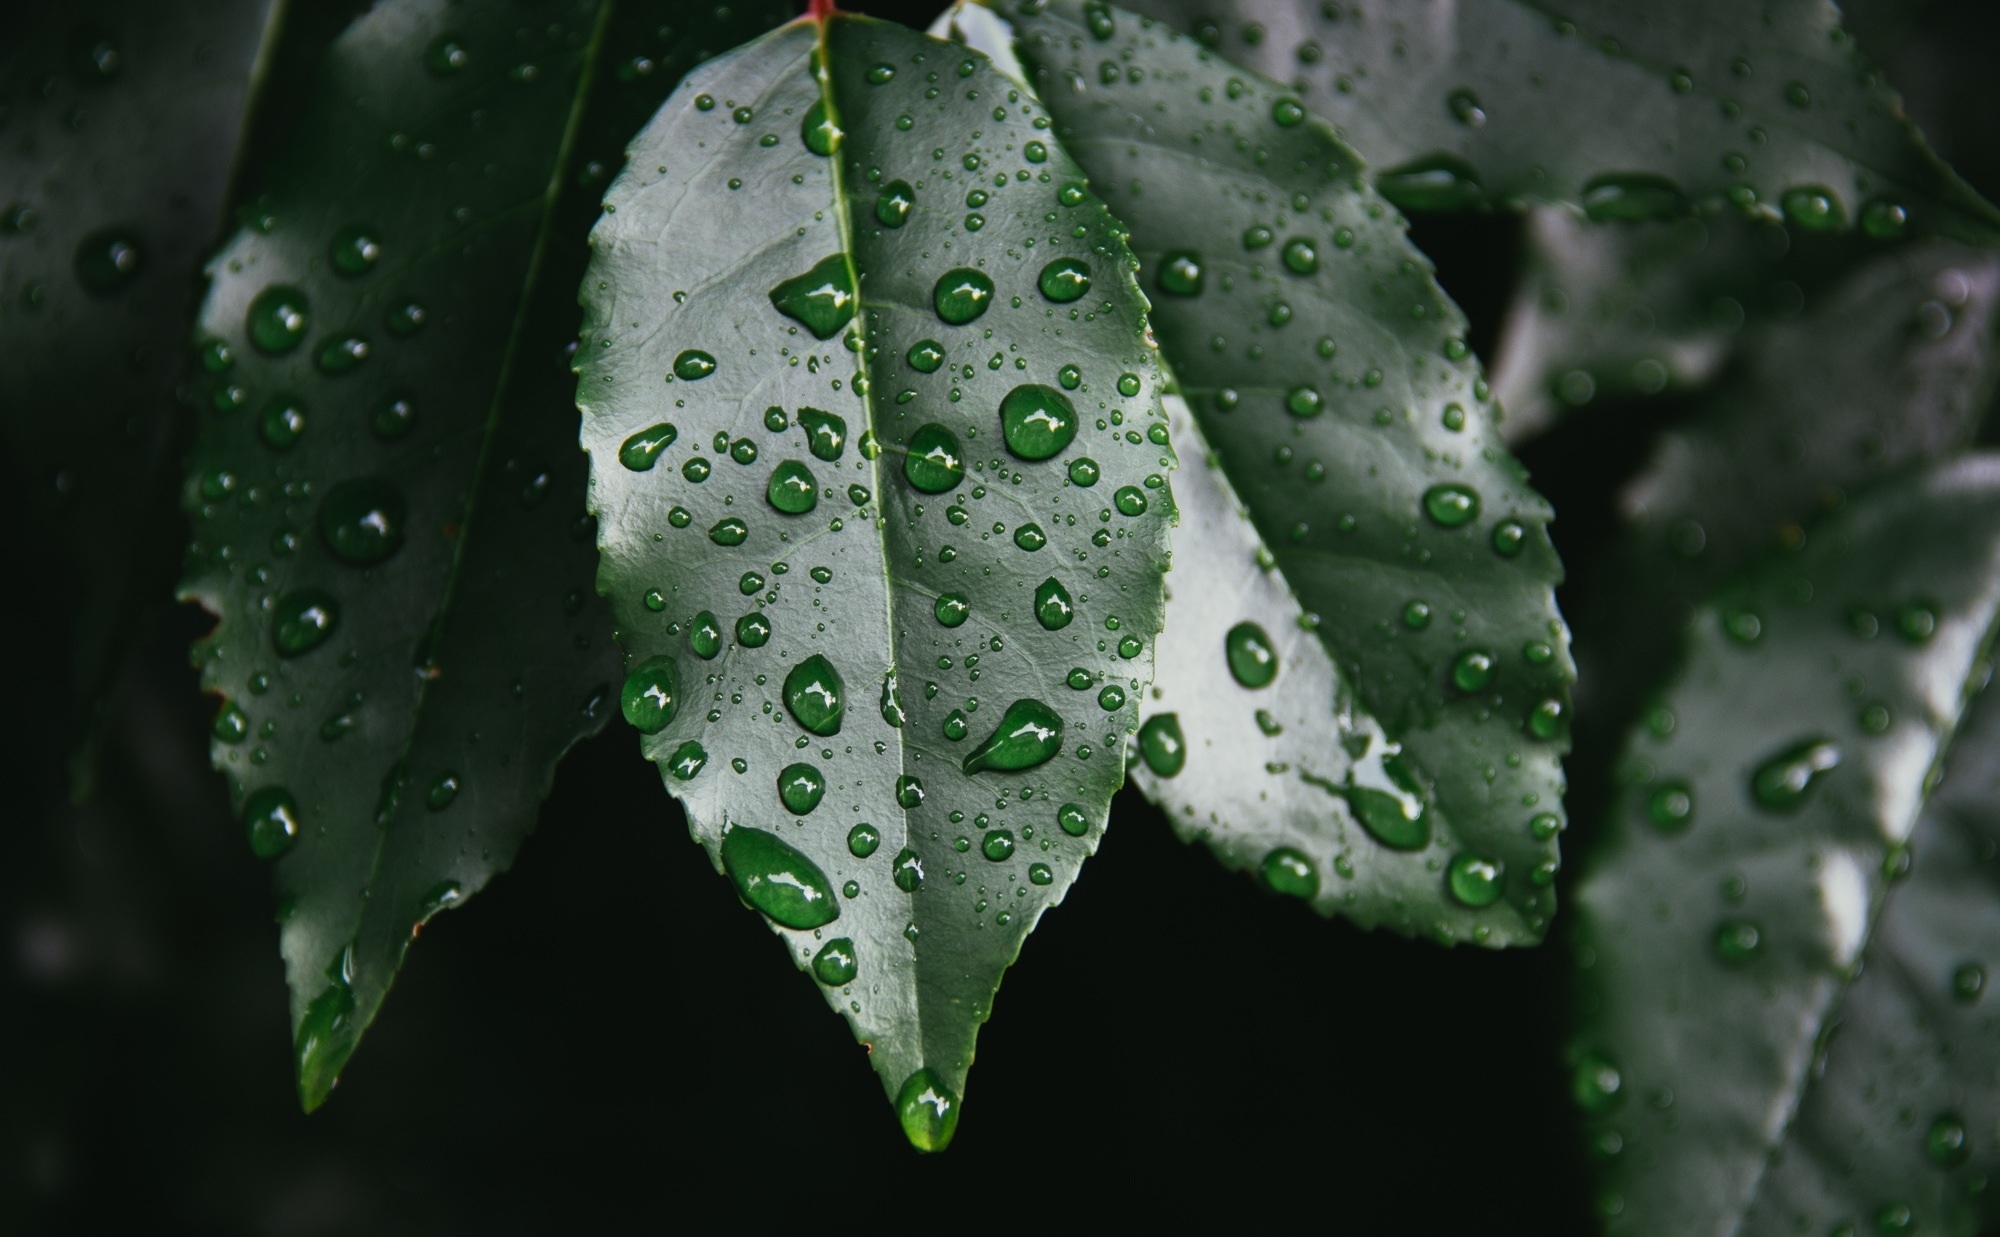 Green leaves in the rain